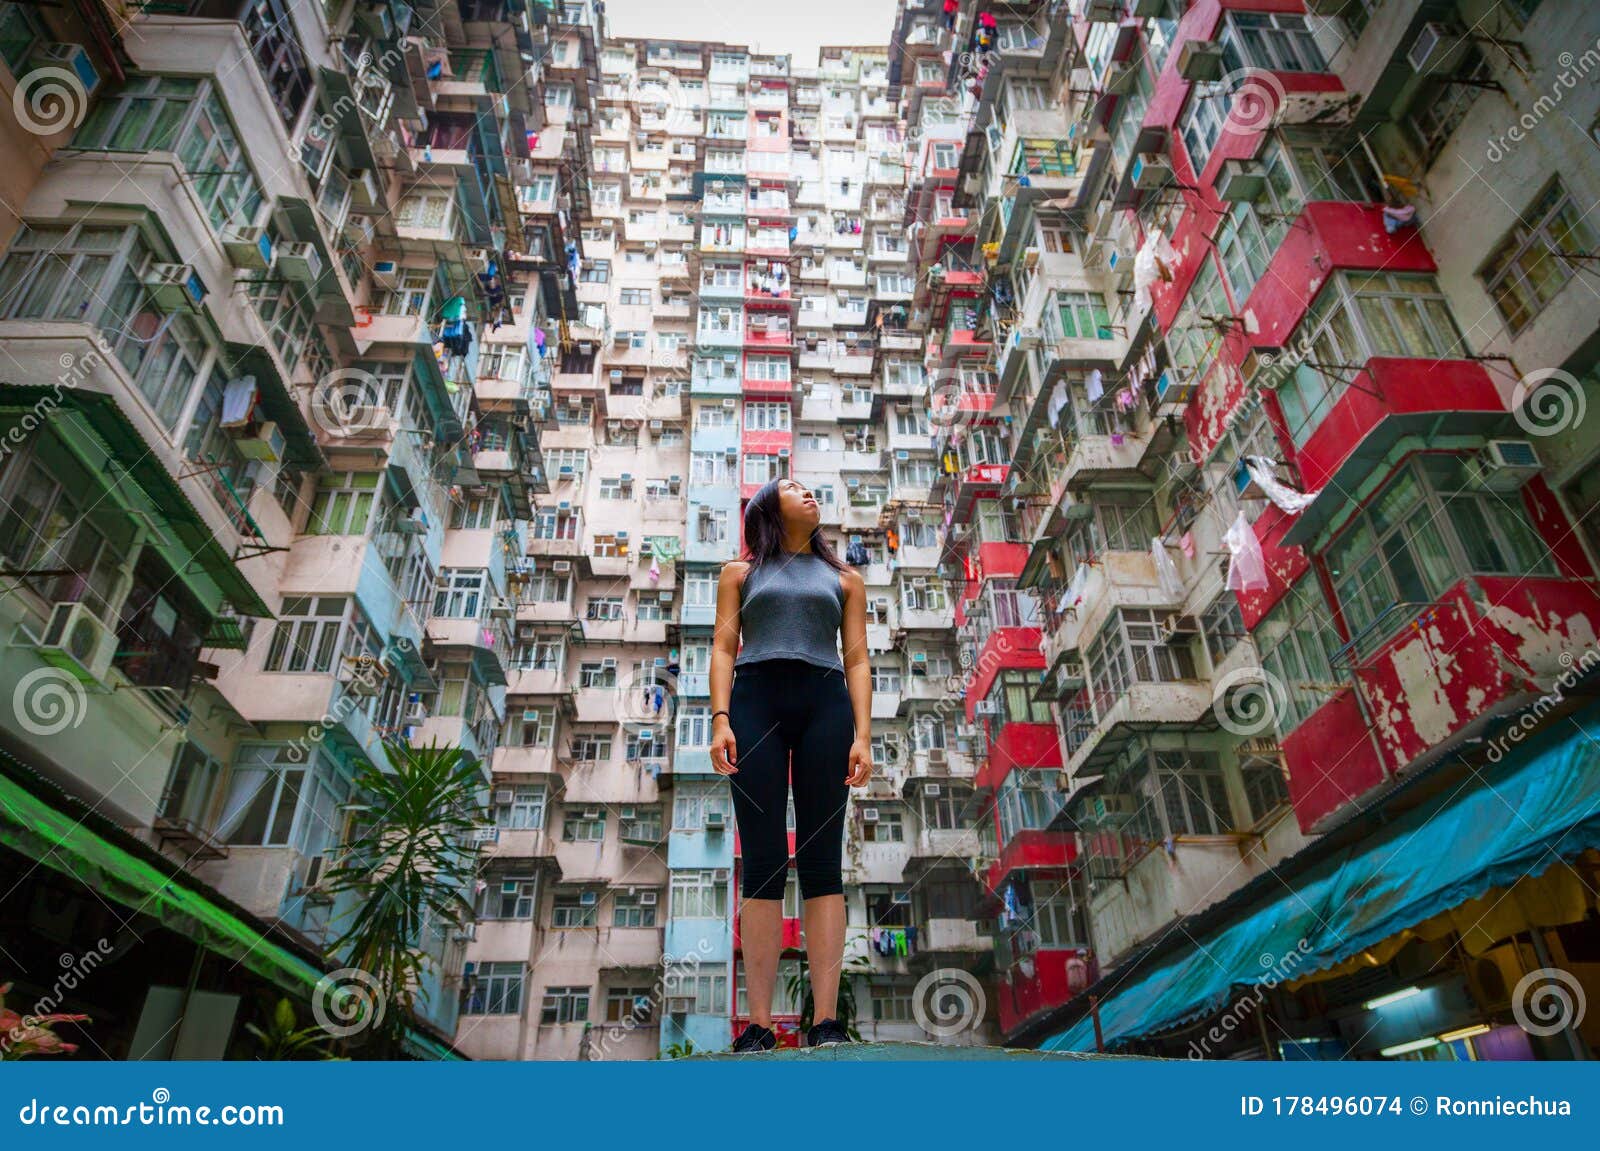 traveler exploring densely populated housing apartments in hong kong